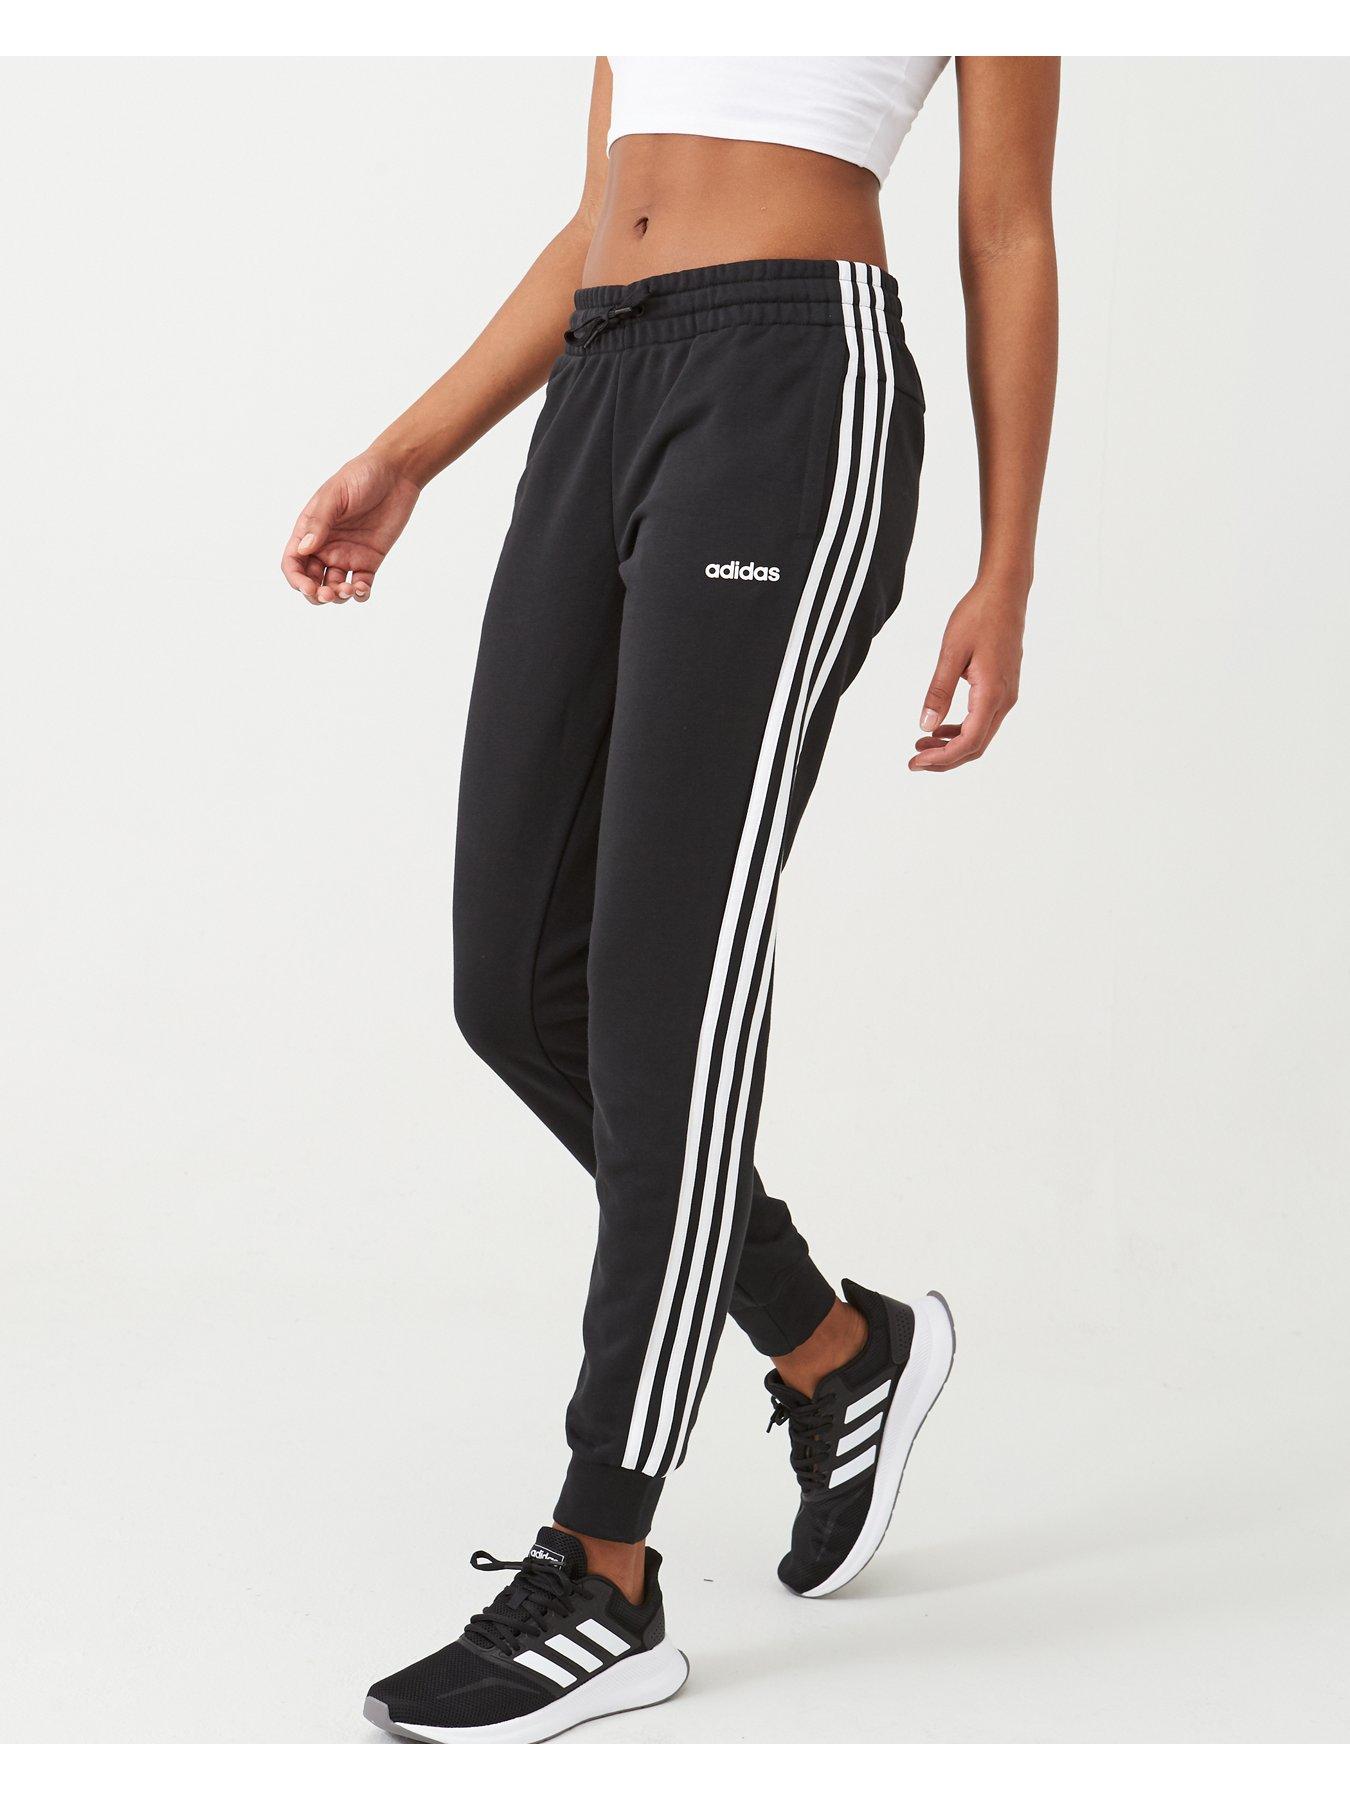 adidas sweatpants joggers womens